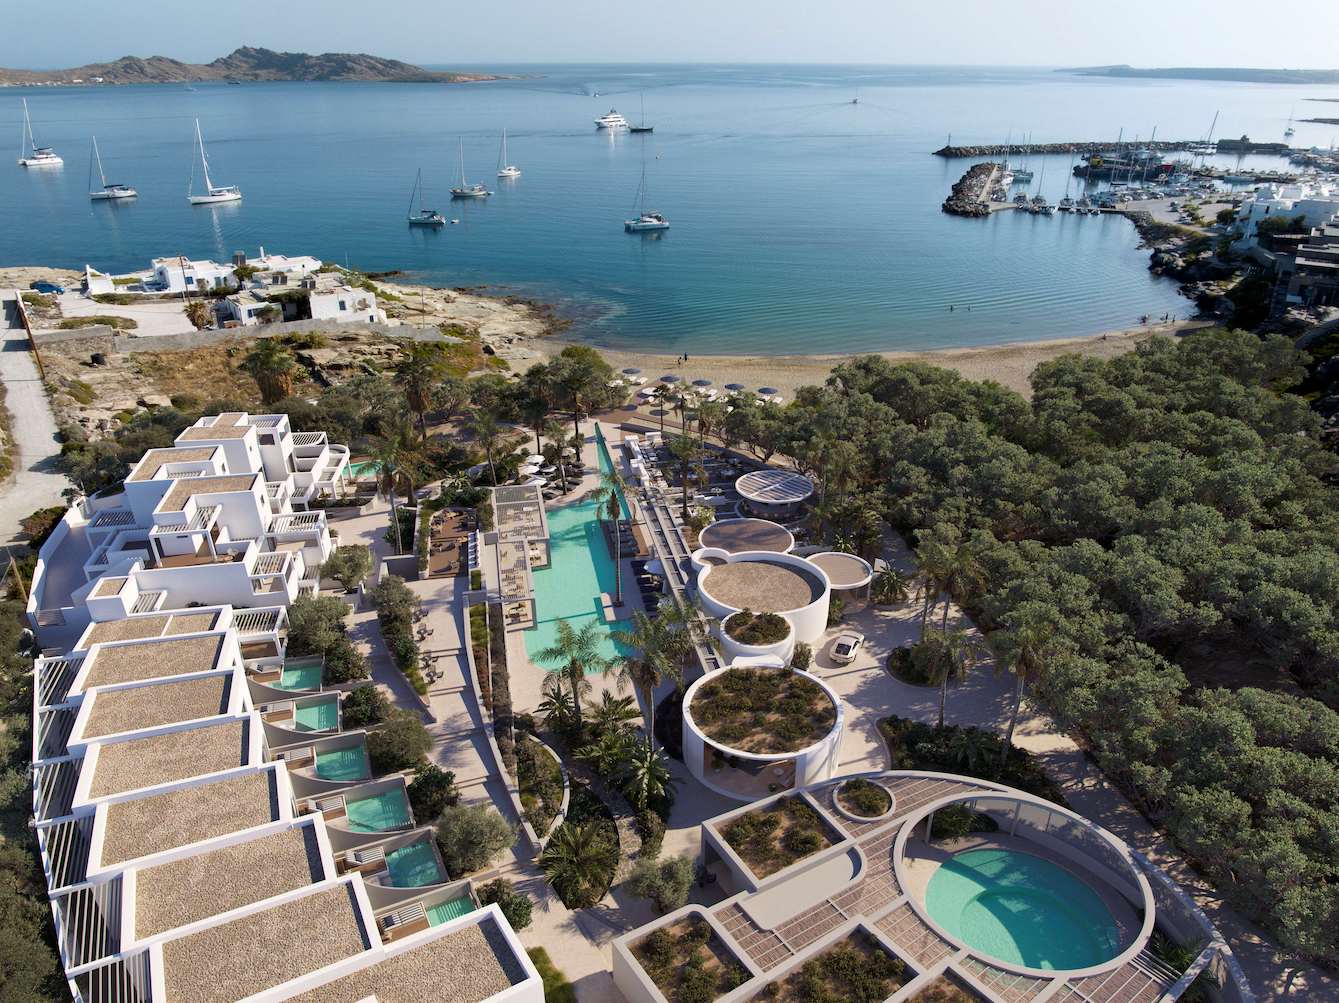 Grivalia Hospitality: To εντυπωσιακό Avant Mar στην Πάρο και οι συνολικές επενδύσεις ύψους 400 εκατ. ευρώ